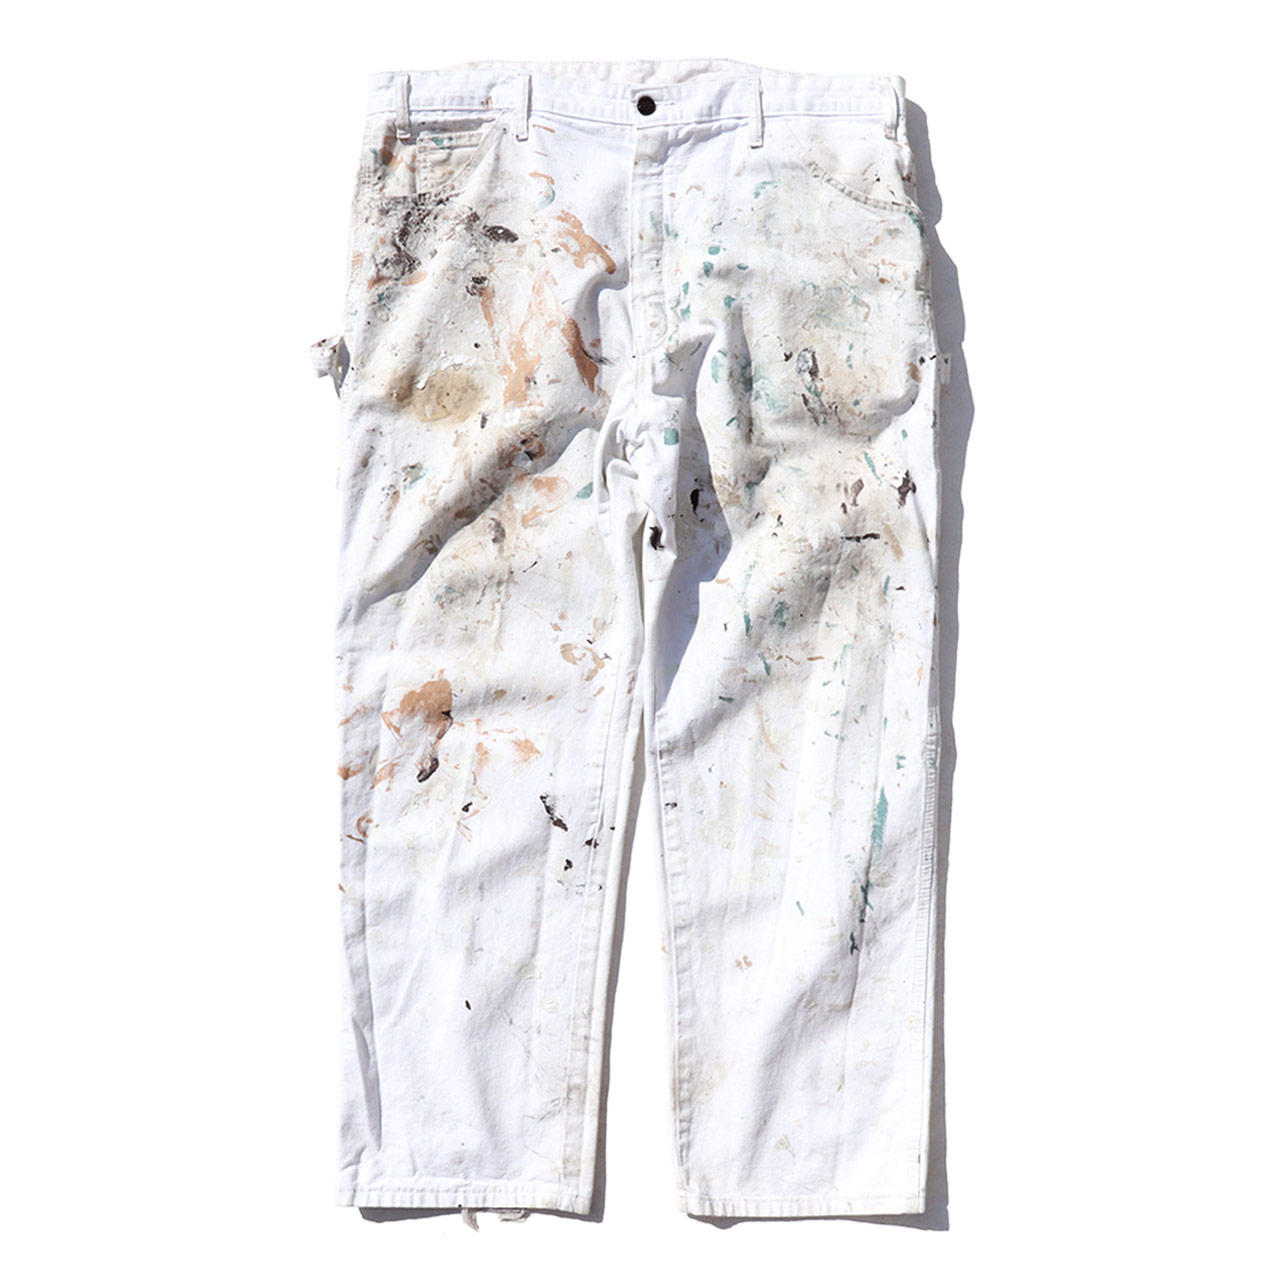 POST JUNK / 00's DICKIES / SHERWIN-WILLIAMS Painted Painter Pants